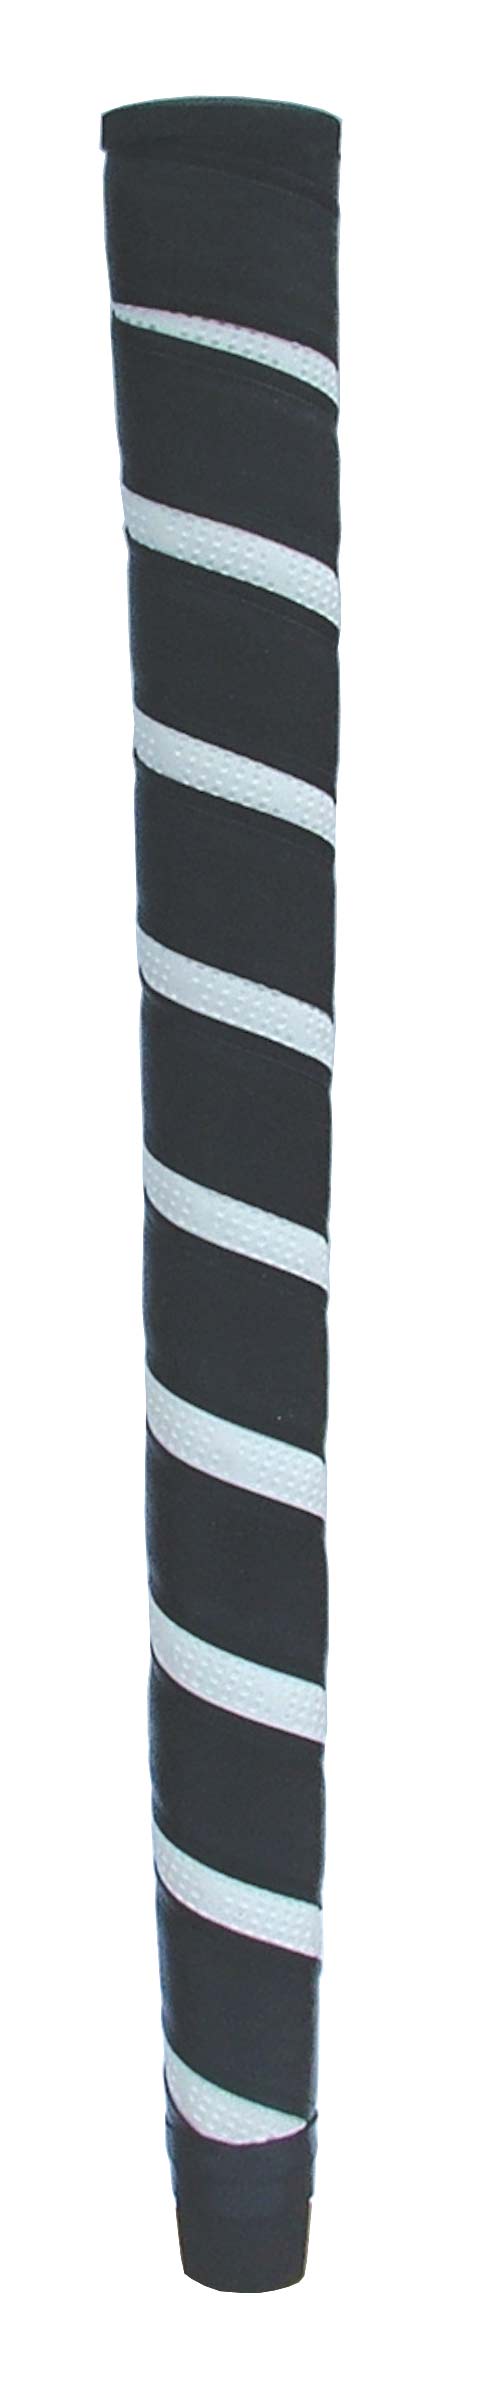 Wrap Style Putter Golf Grip Black/ White